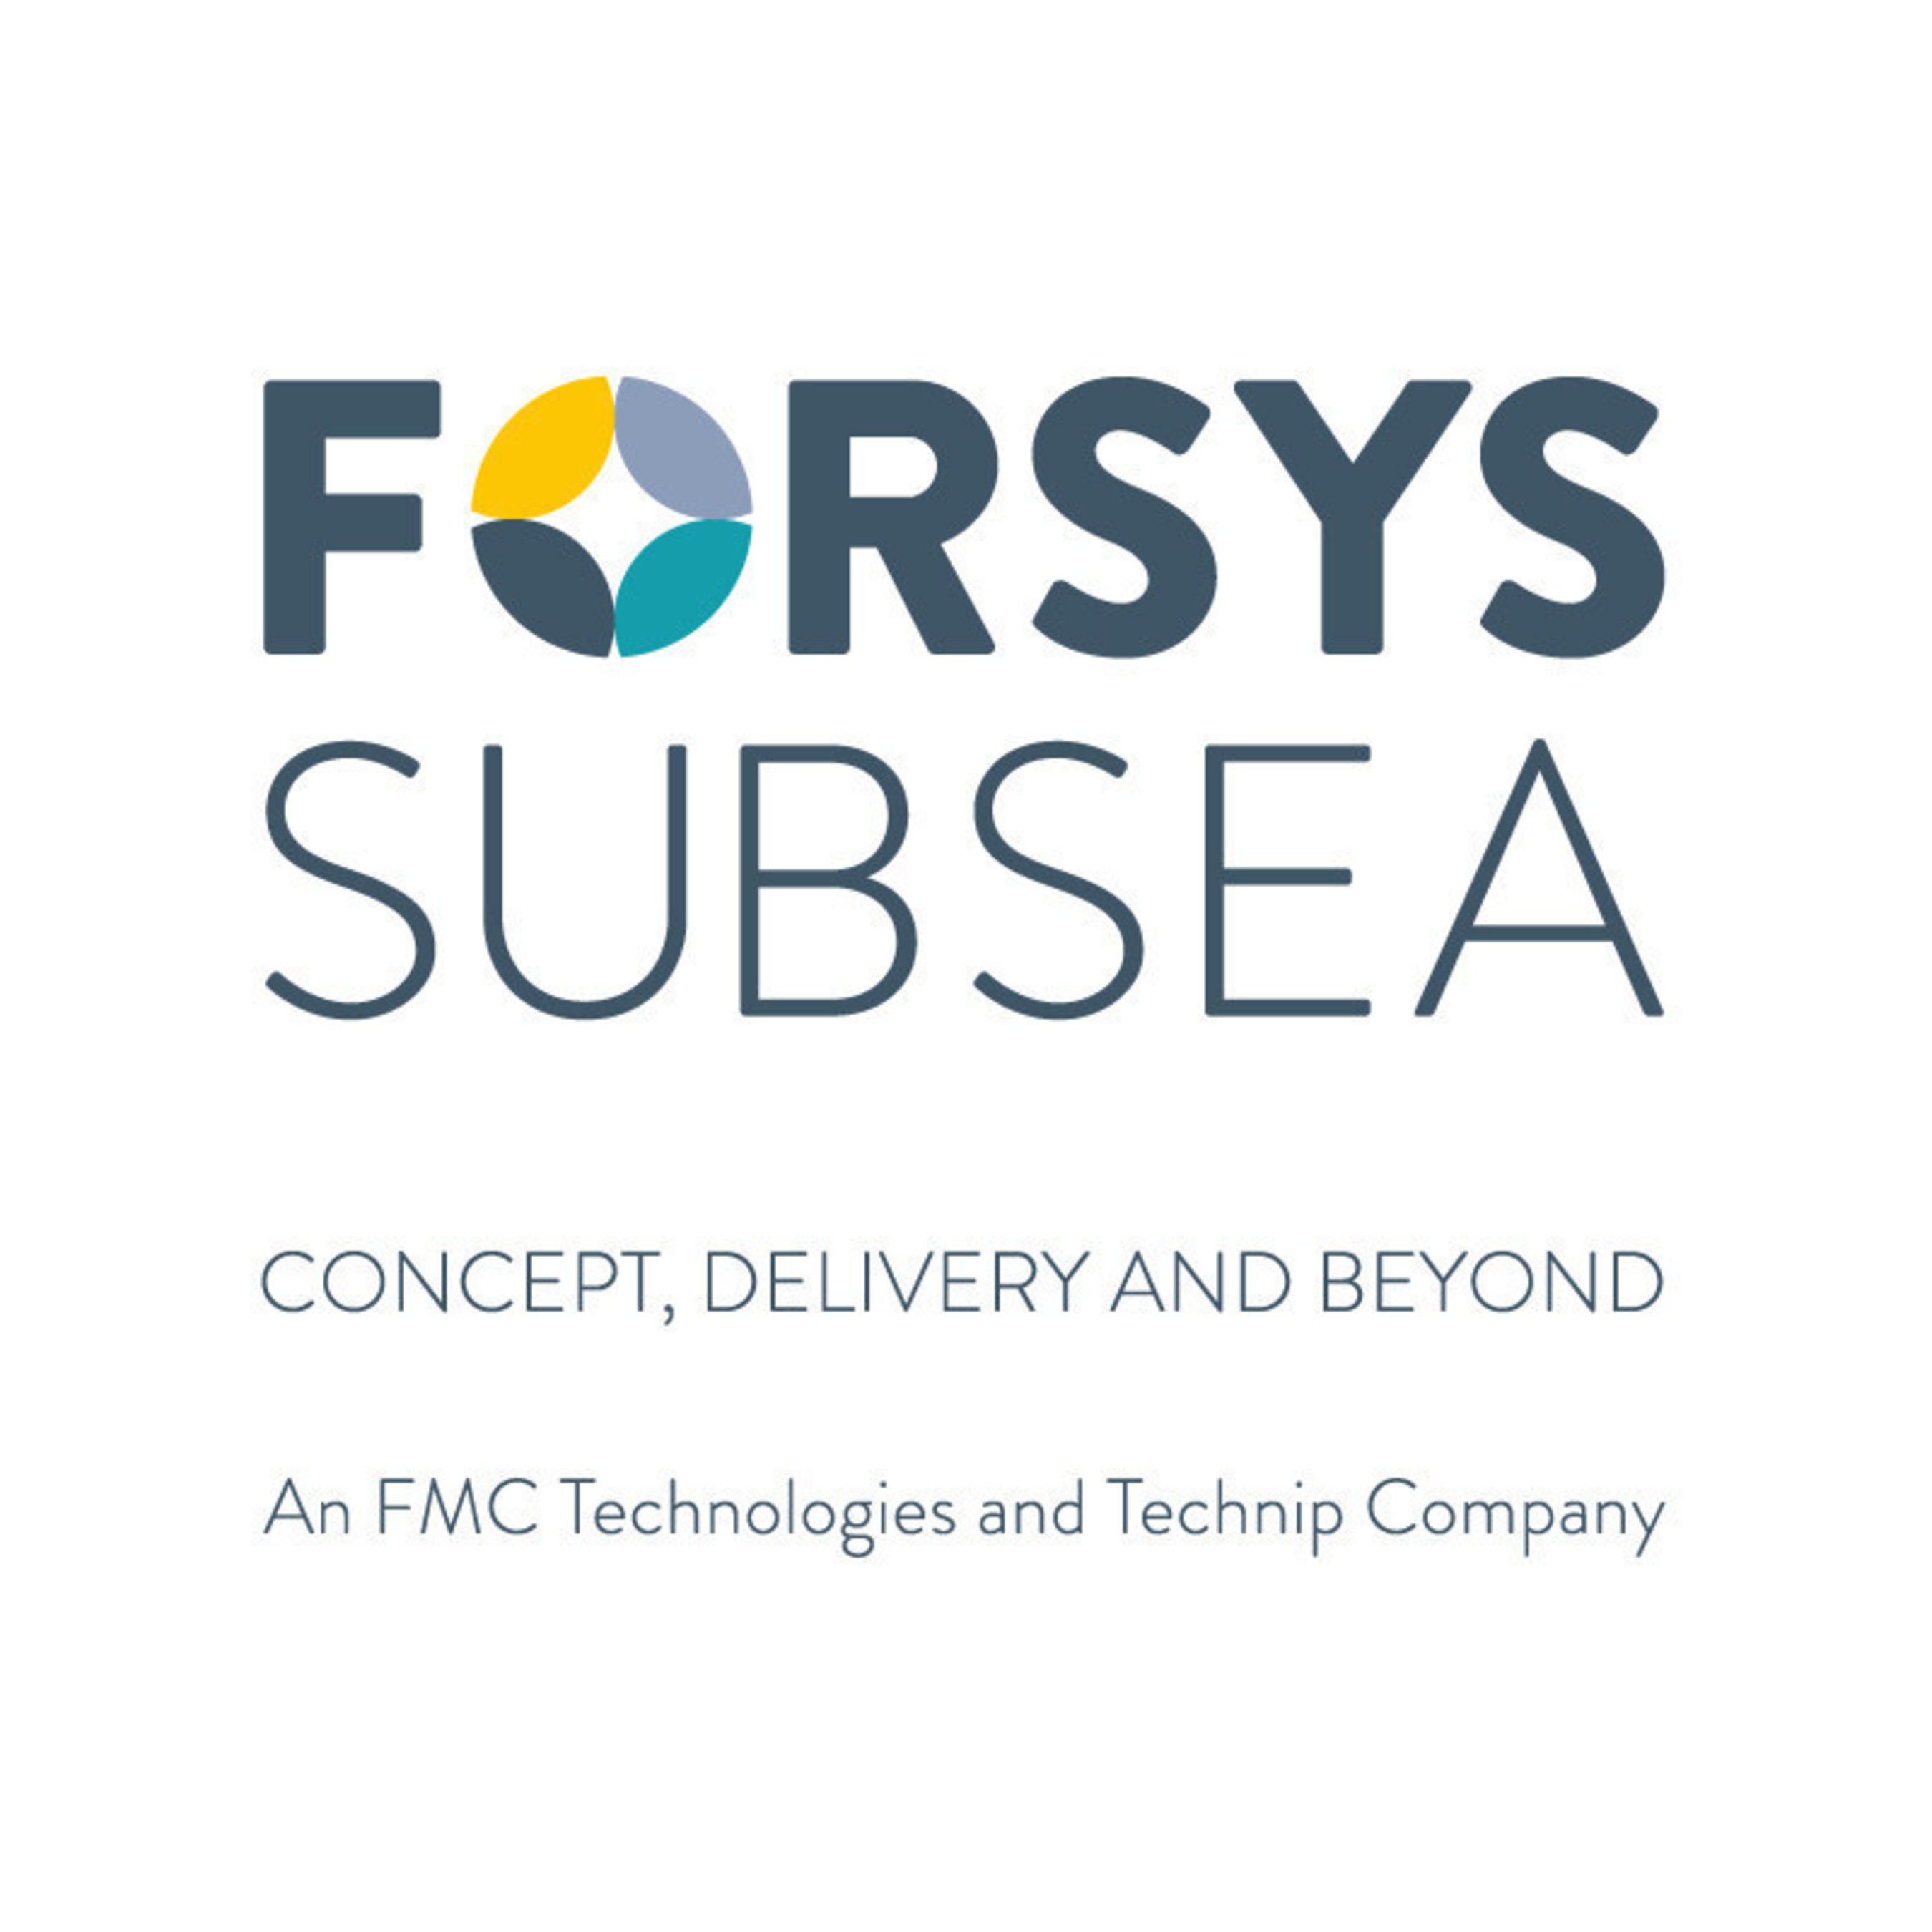 Fiorsys Subsea logo